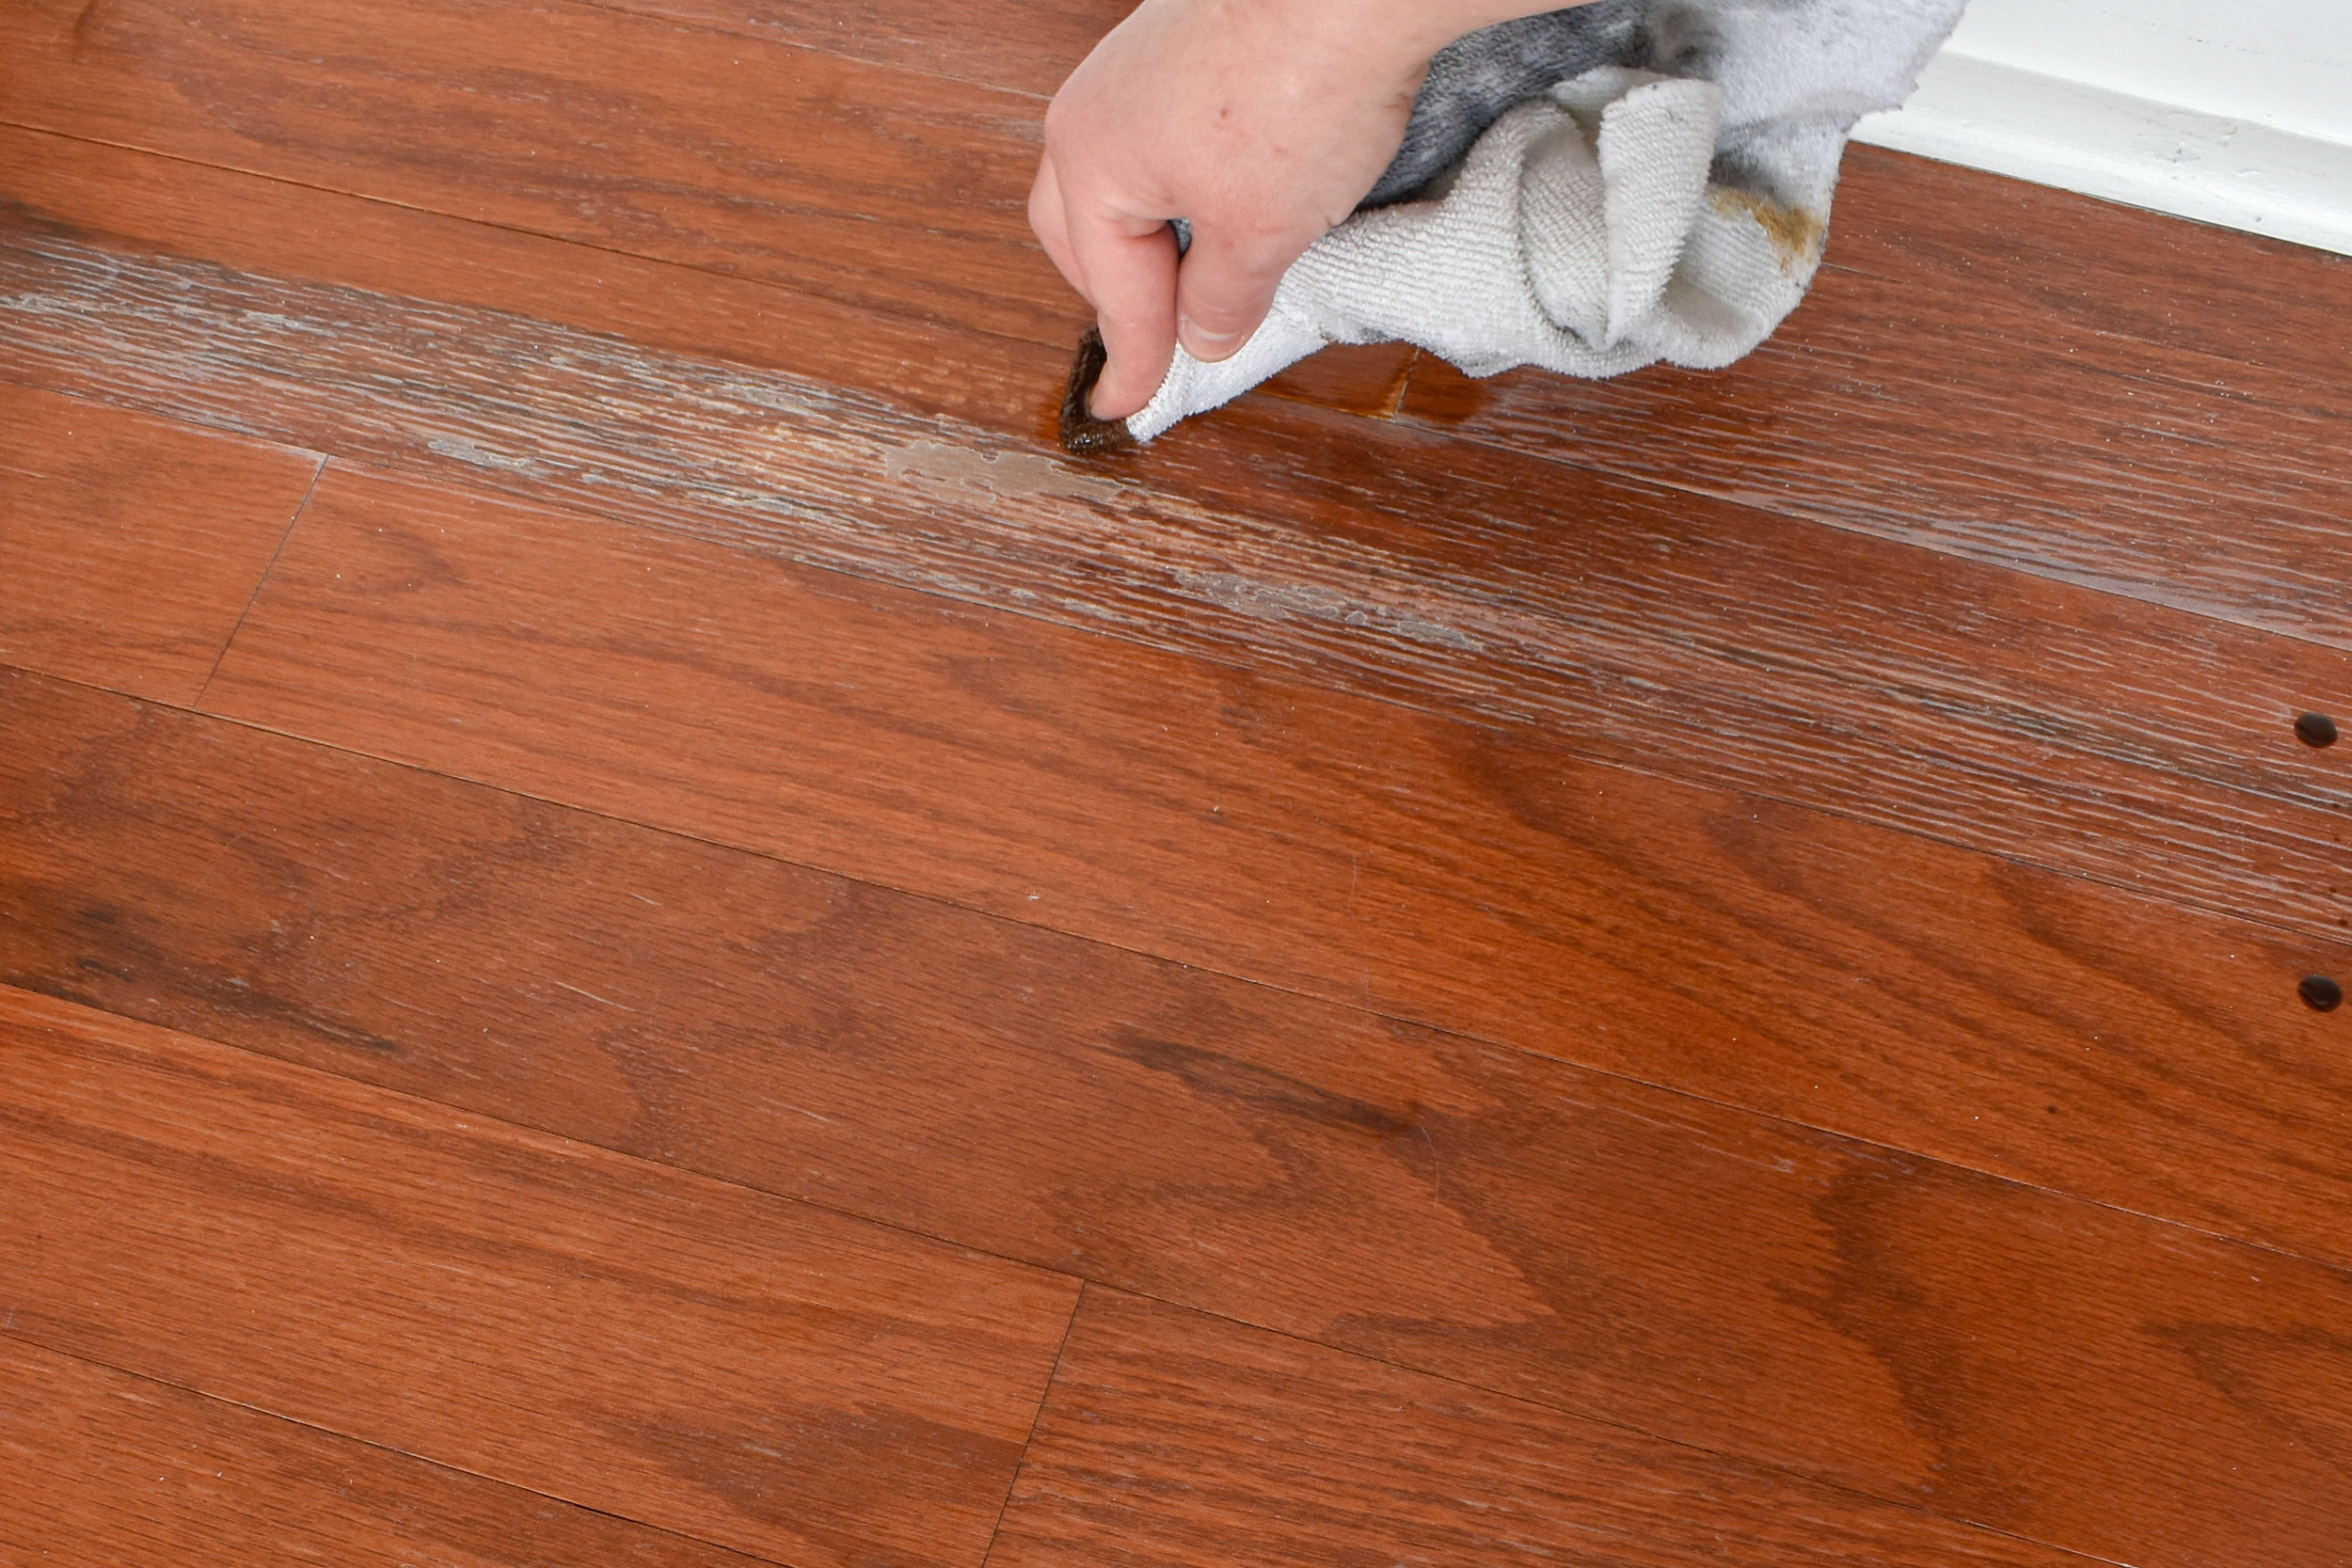 How To Make Old Hardwood Floors Shine, How To Clean Prefinished Hardwood Floors